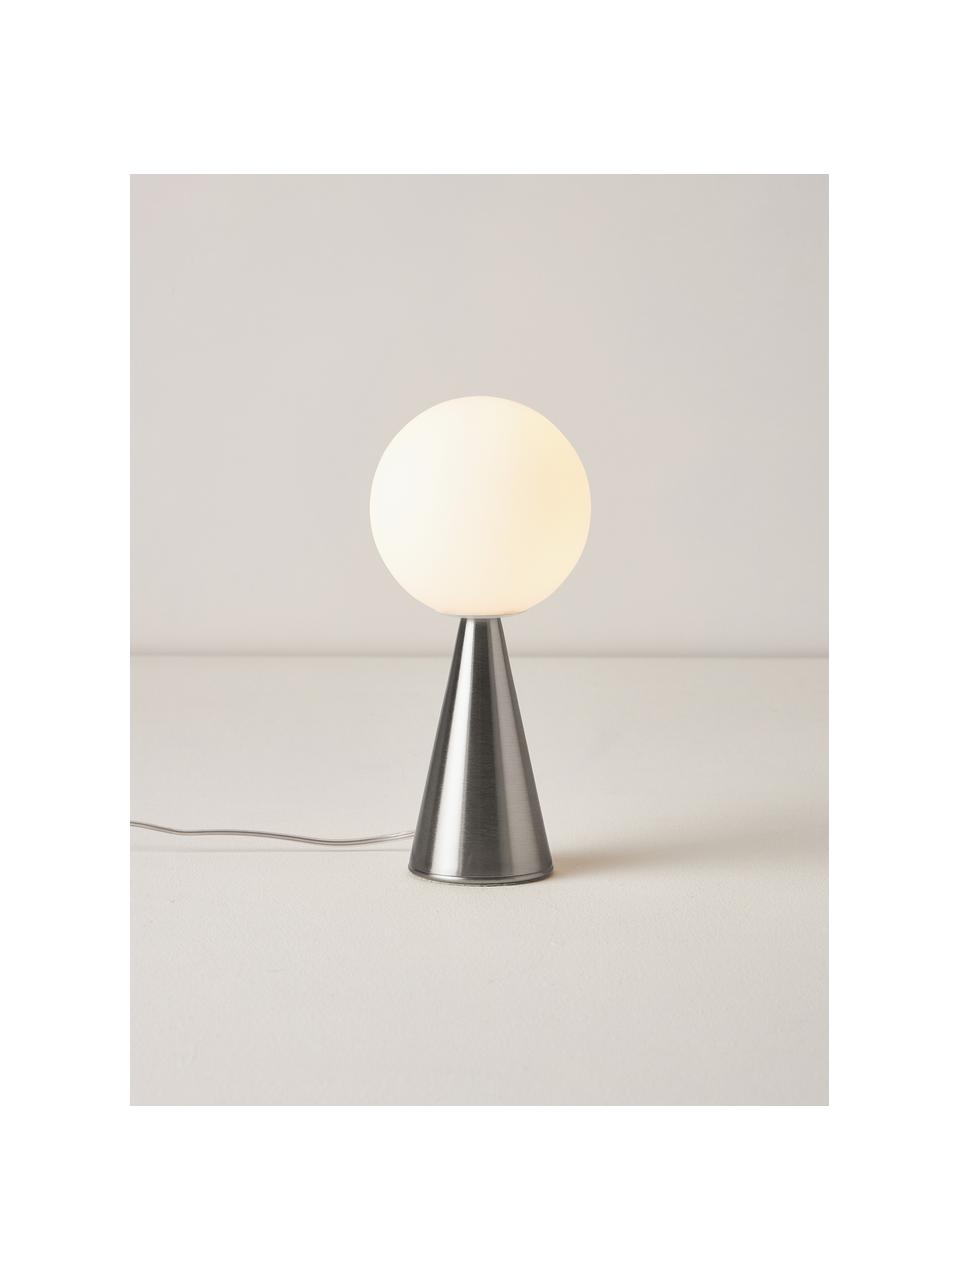 Kleine tafellamp Bilia, handgemaakt, Lampenkap: glas, Wit, zilverkleurig, Ø 12 x H 26 cm